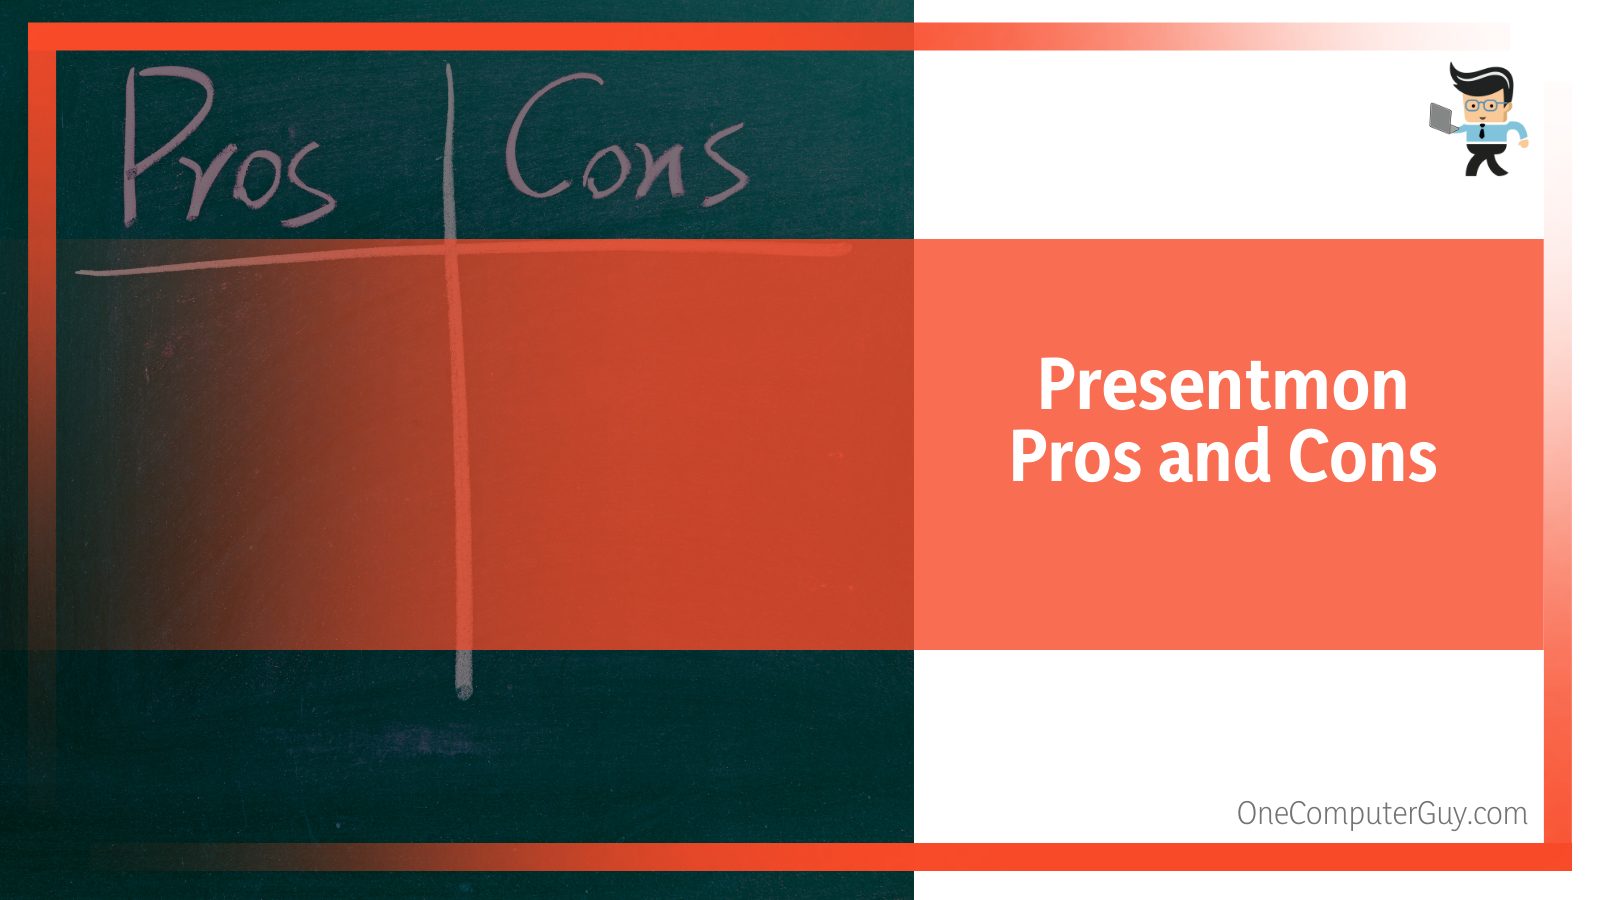 Presentmon Pros and Cons